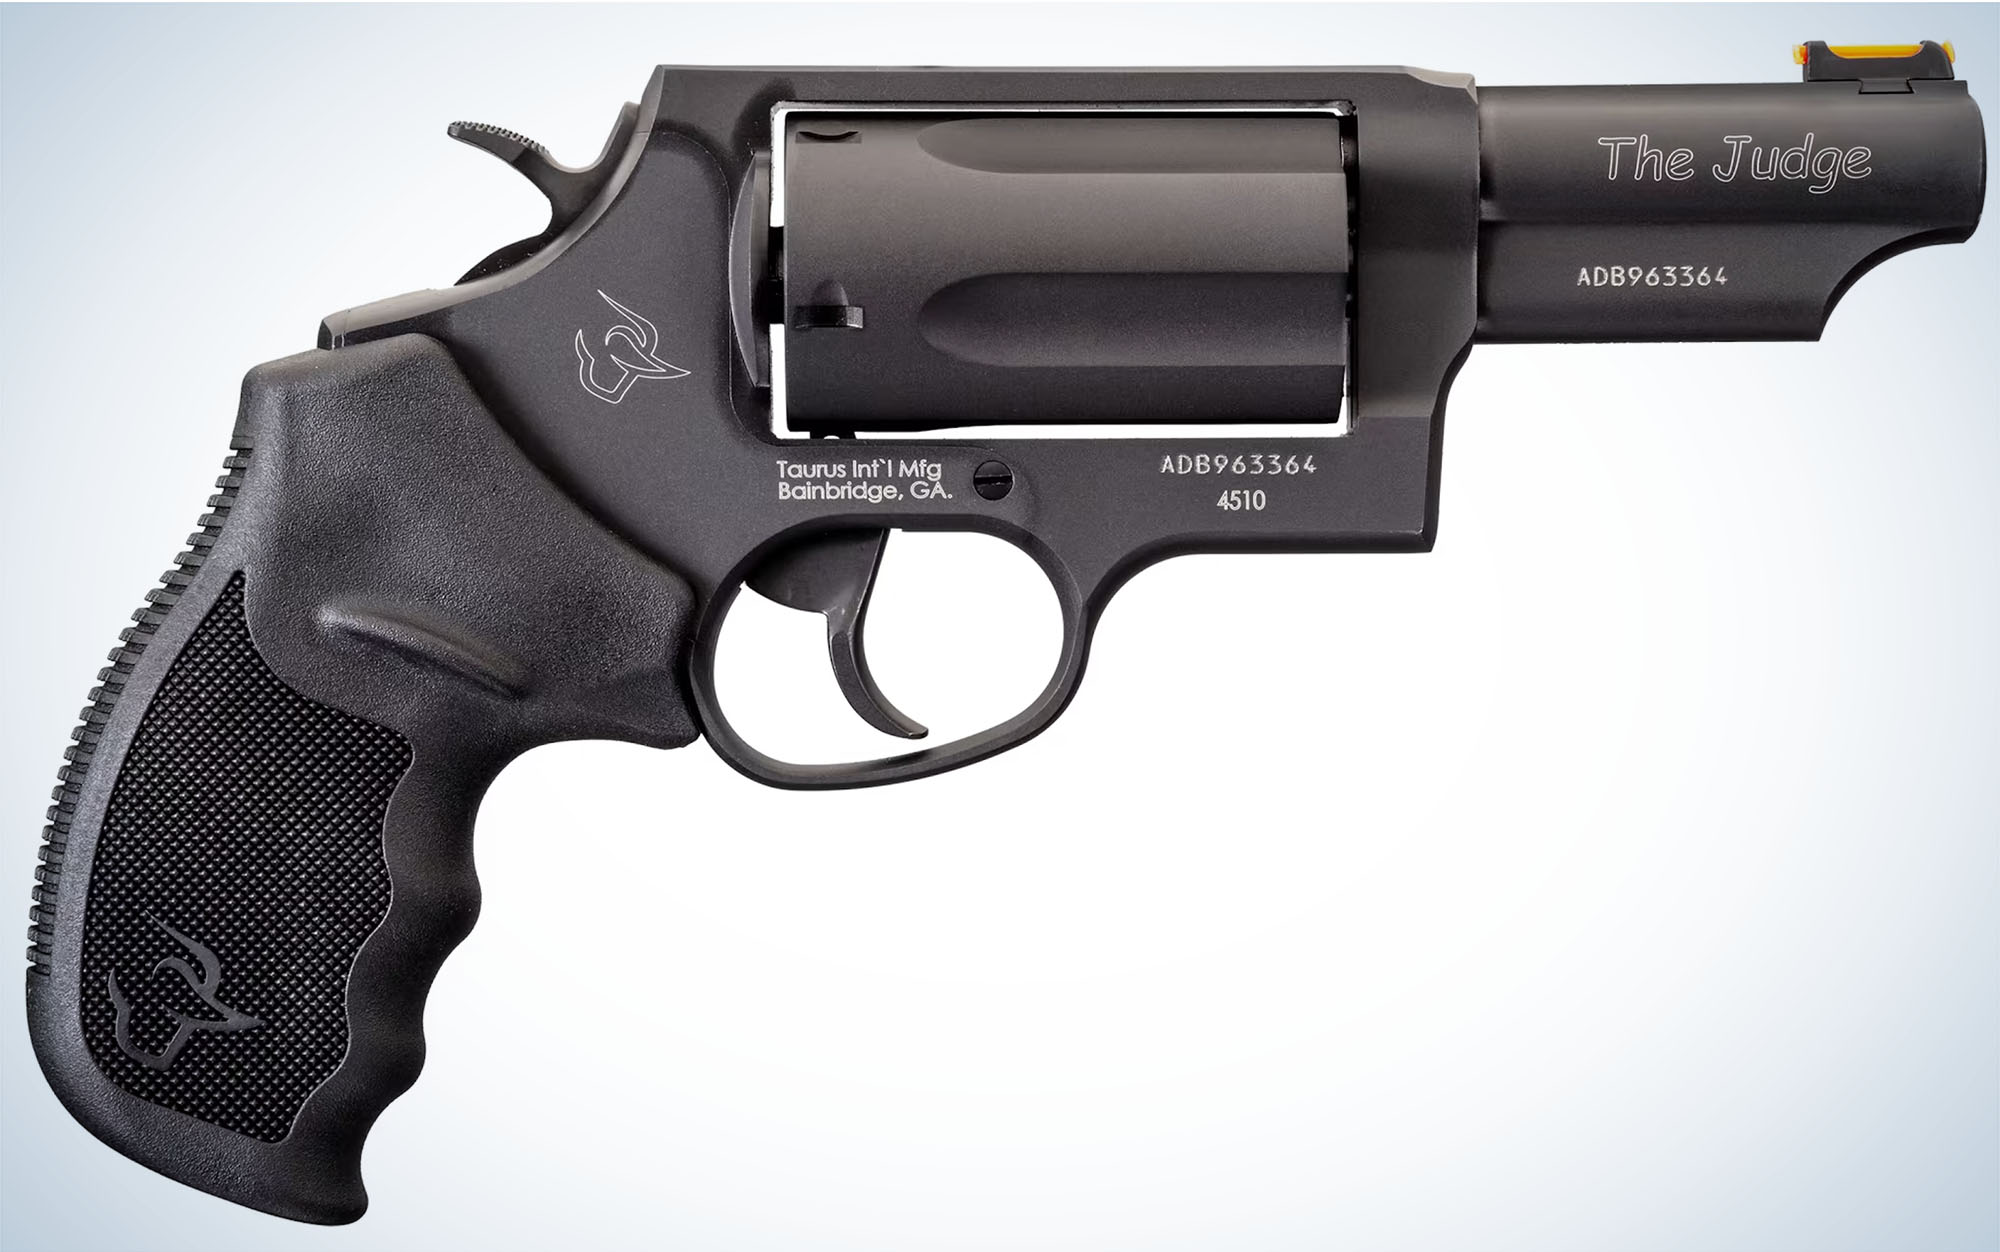 The Taurus Judge Double-Action Revolver fires .410 shotshells.